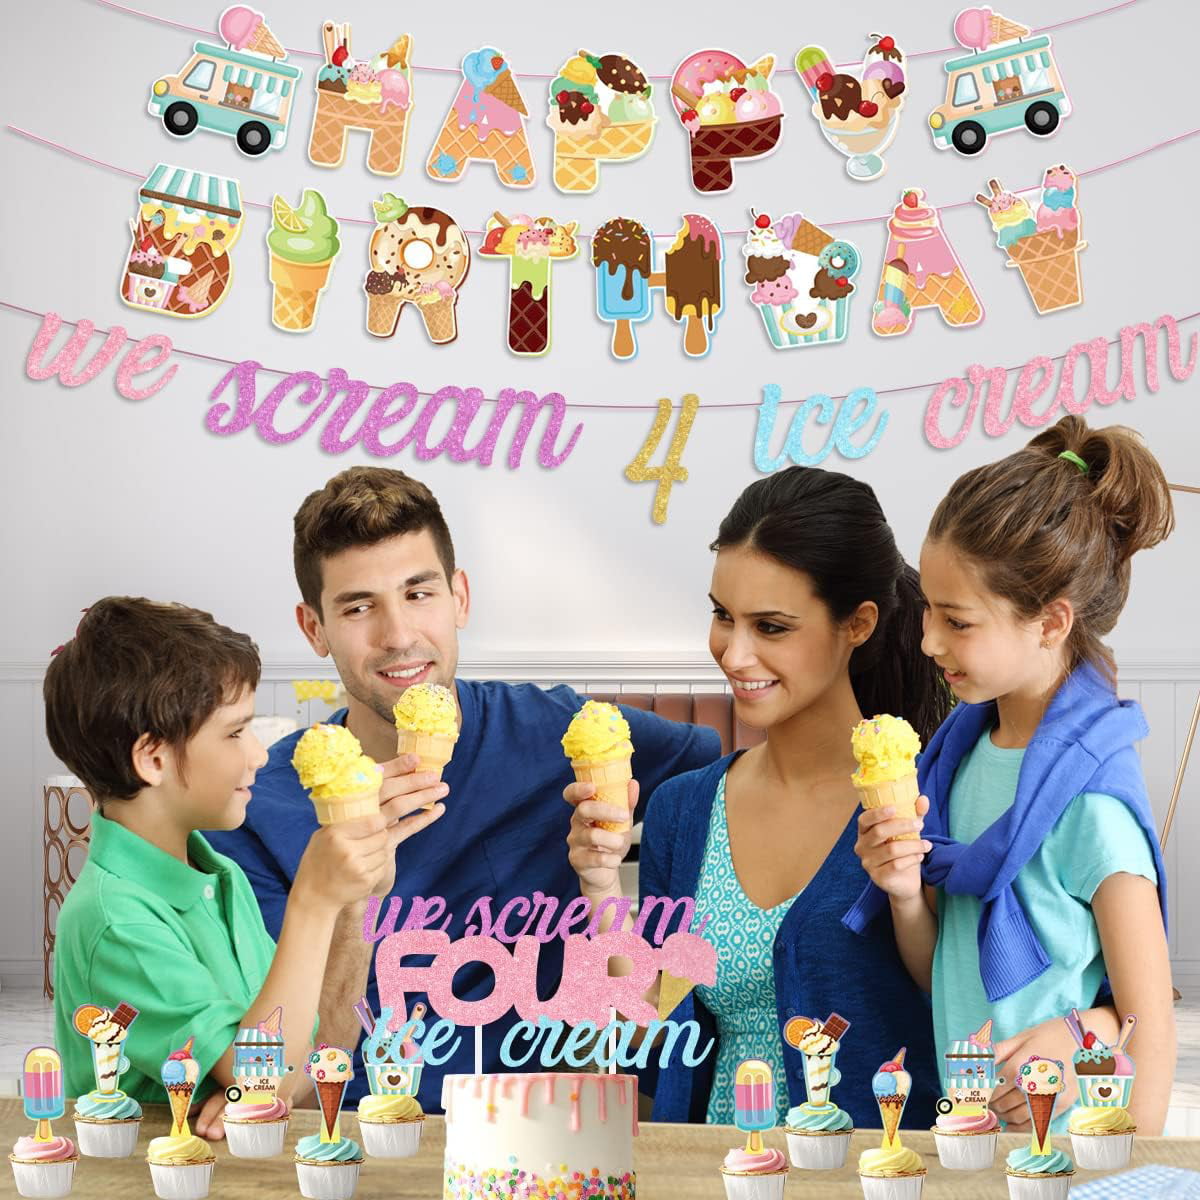 I Scream Four Ice Cream Birthday Party 9 Dinner Plates 32 Count